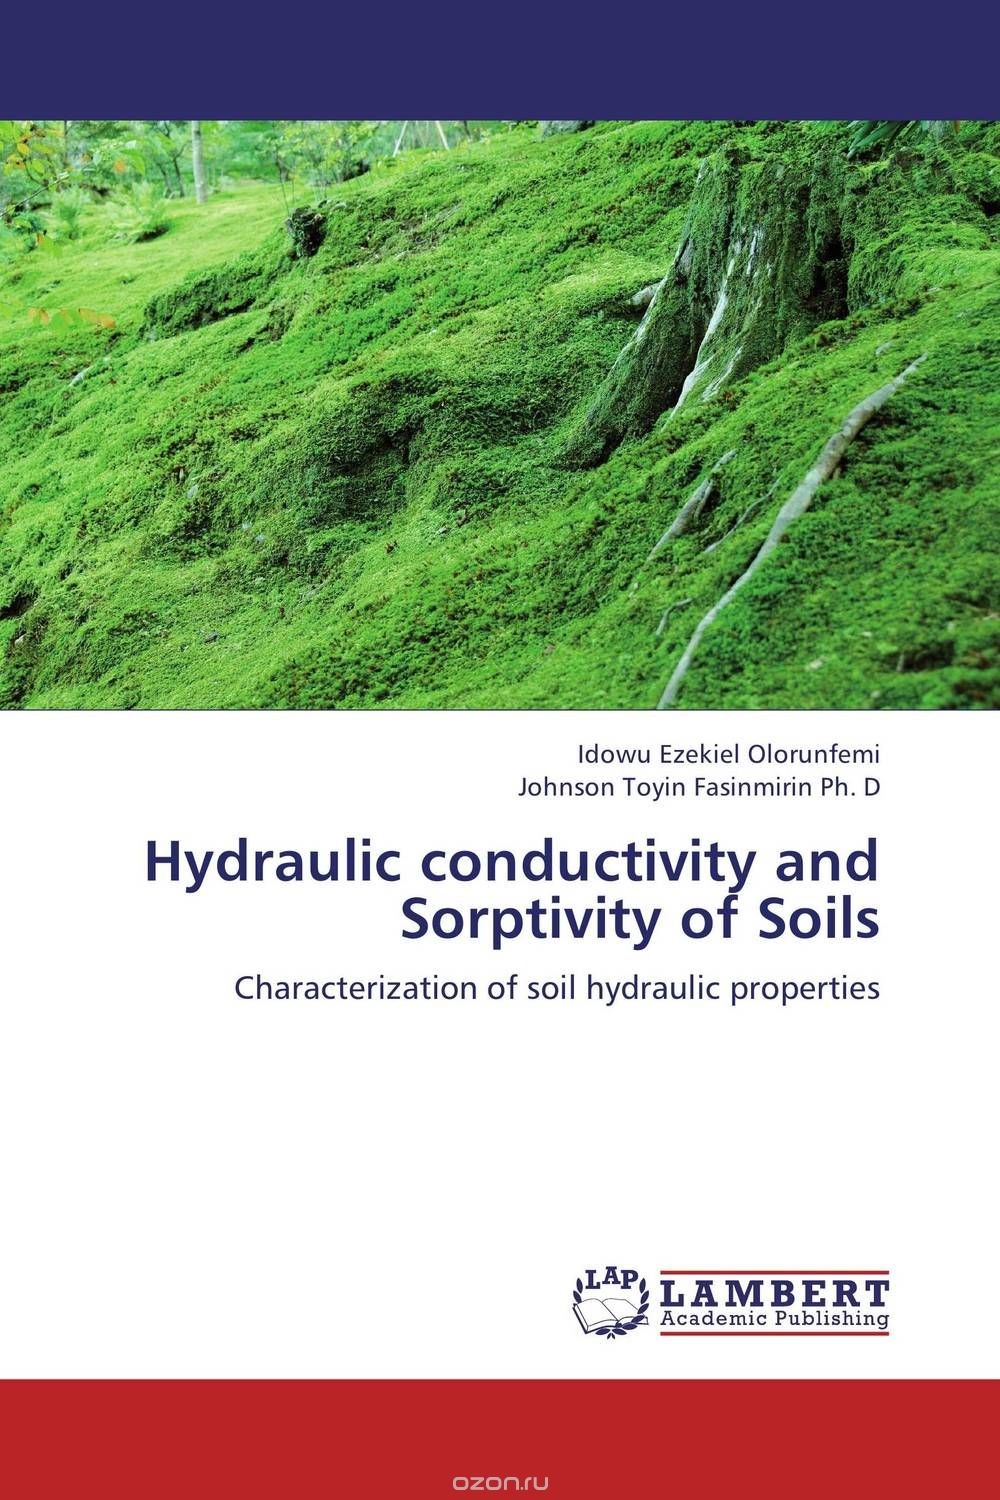 Скачать книгу "Hydraulic conductivity and Sorptivity of Soils"